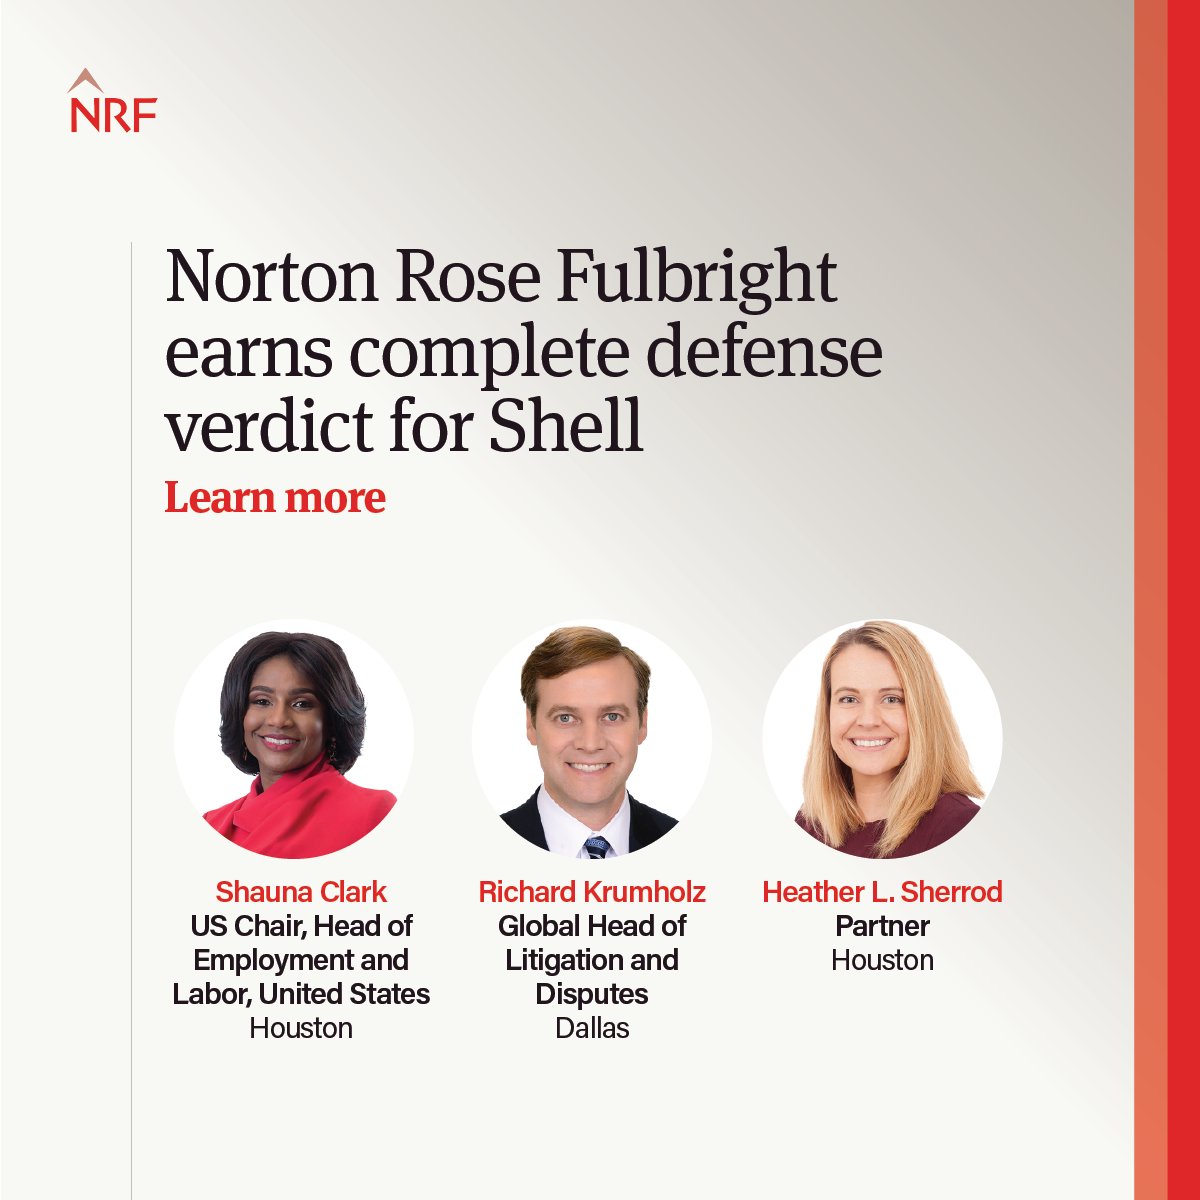 A litigation team led by Shauna Clark, Richard Krumholz and Heather Sherrod obtained a complete defense verdict for longtime client Shell. ow.ly/GqFO50RnBxl